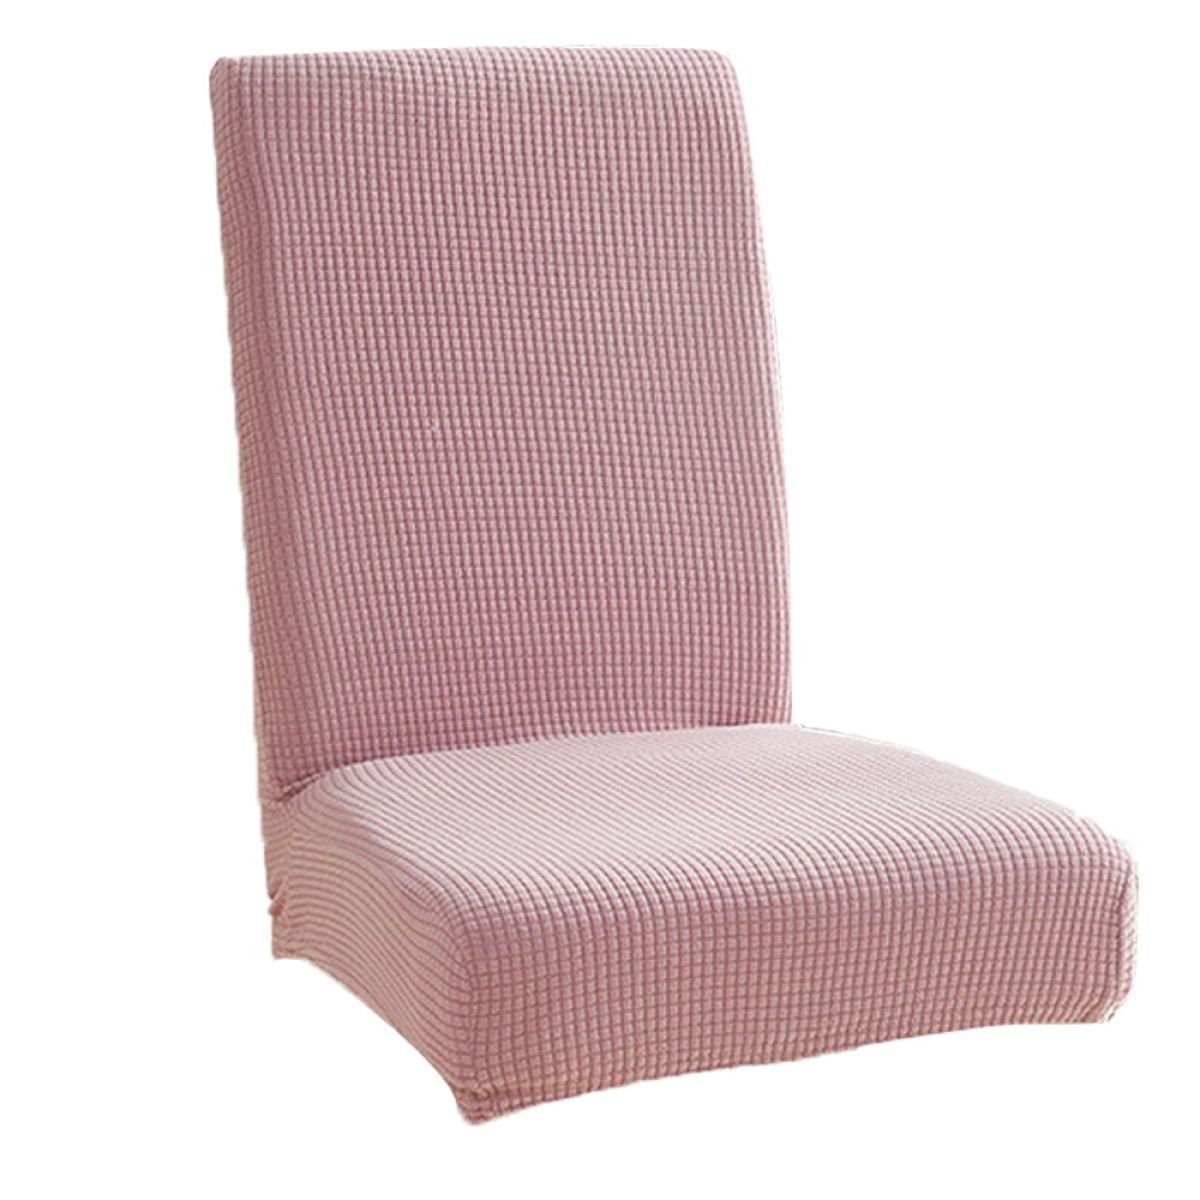 Stuhlbezug Stretch Abnehmbare Waschbar Stuhlbezug für Esszimmerstühle, Juoungle Rosa